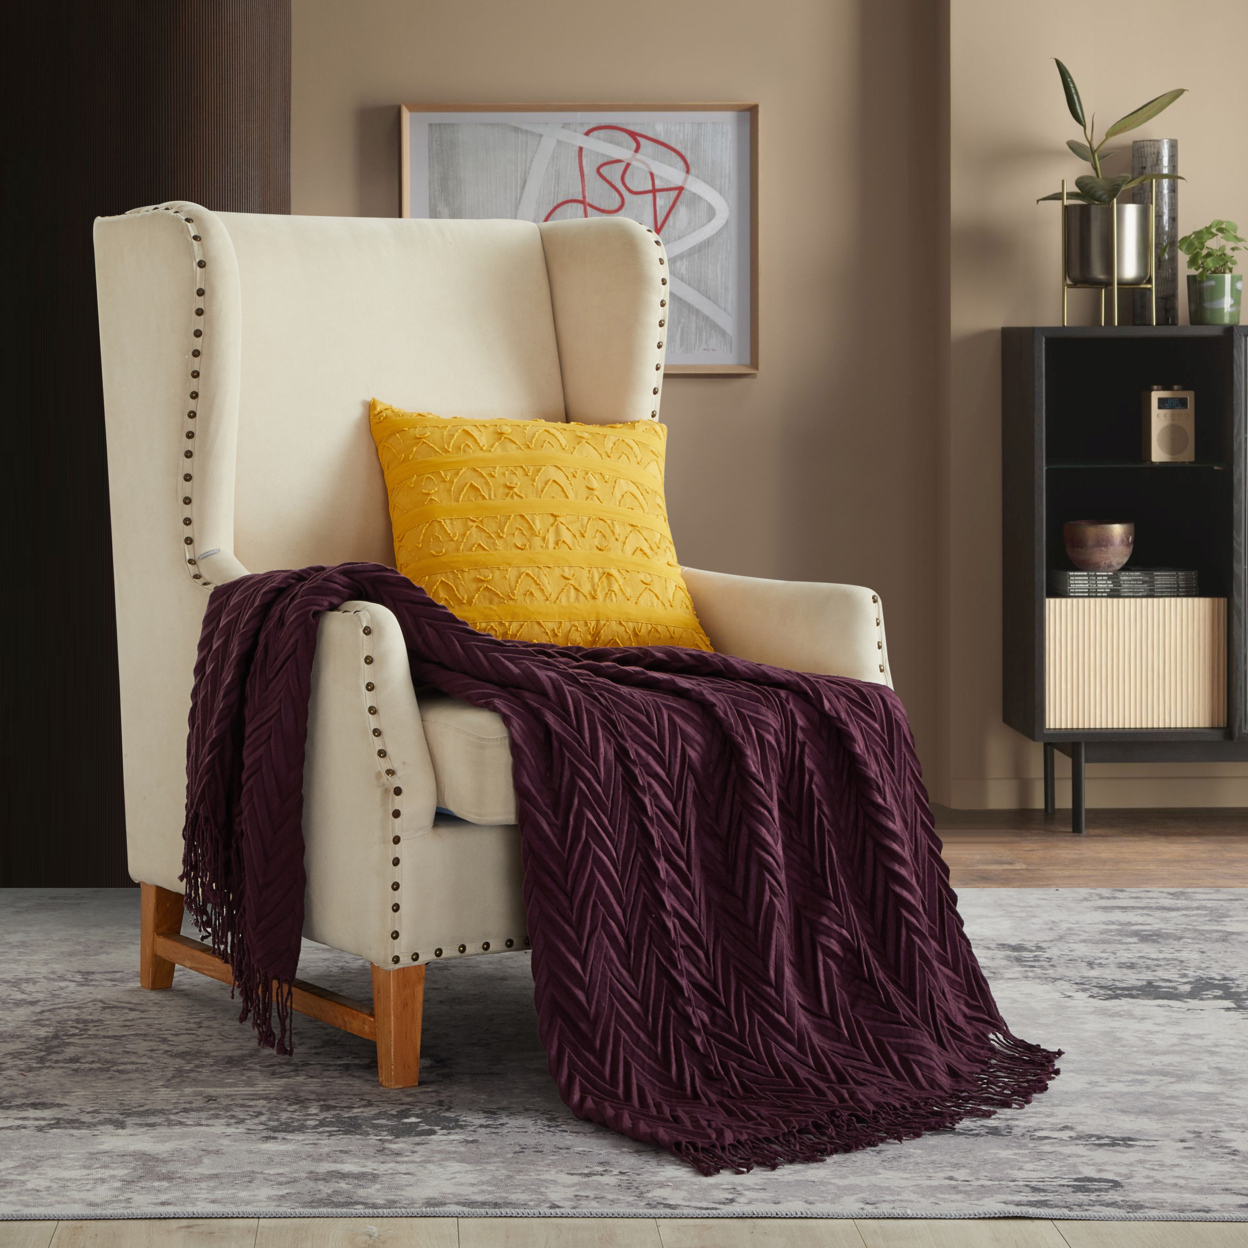 NY&C Home Doremost Zig-zag Pattern With Tassel Fringe Throw Blanket - Purple